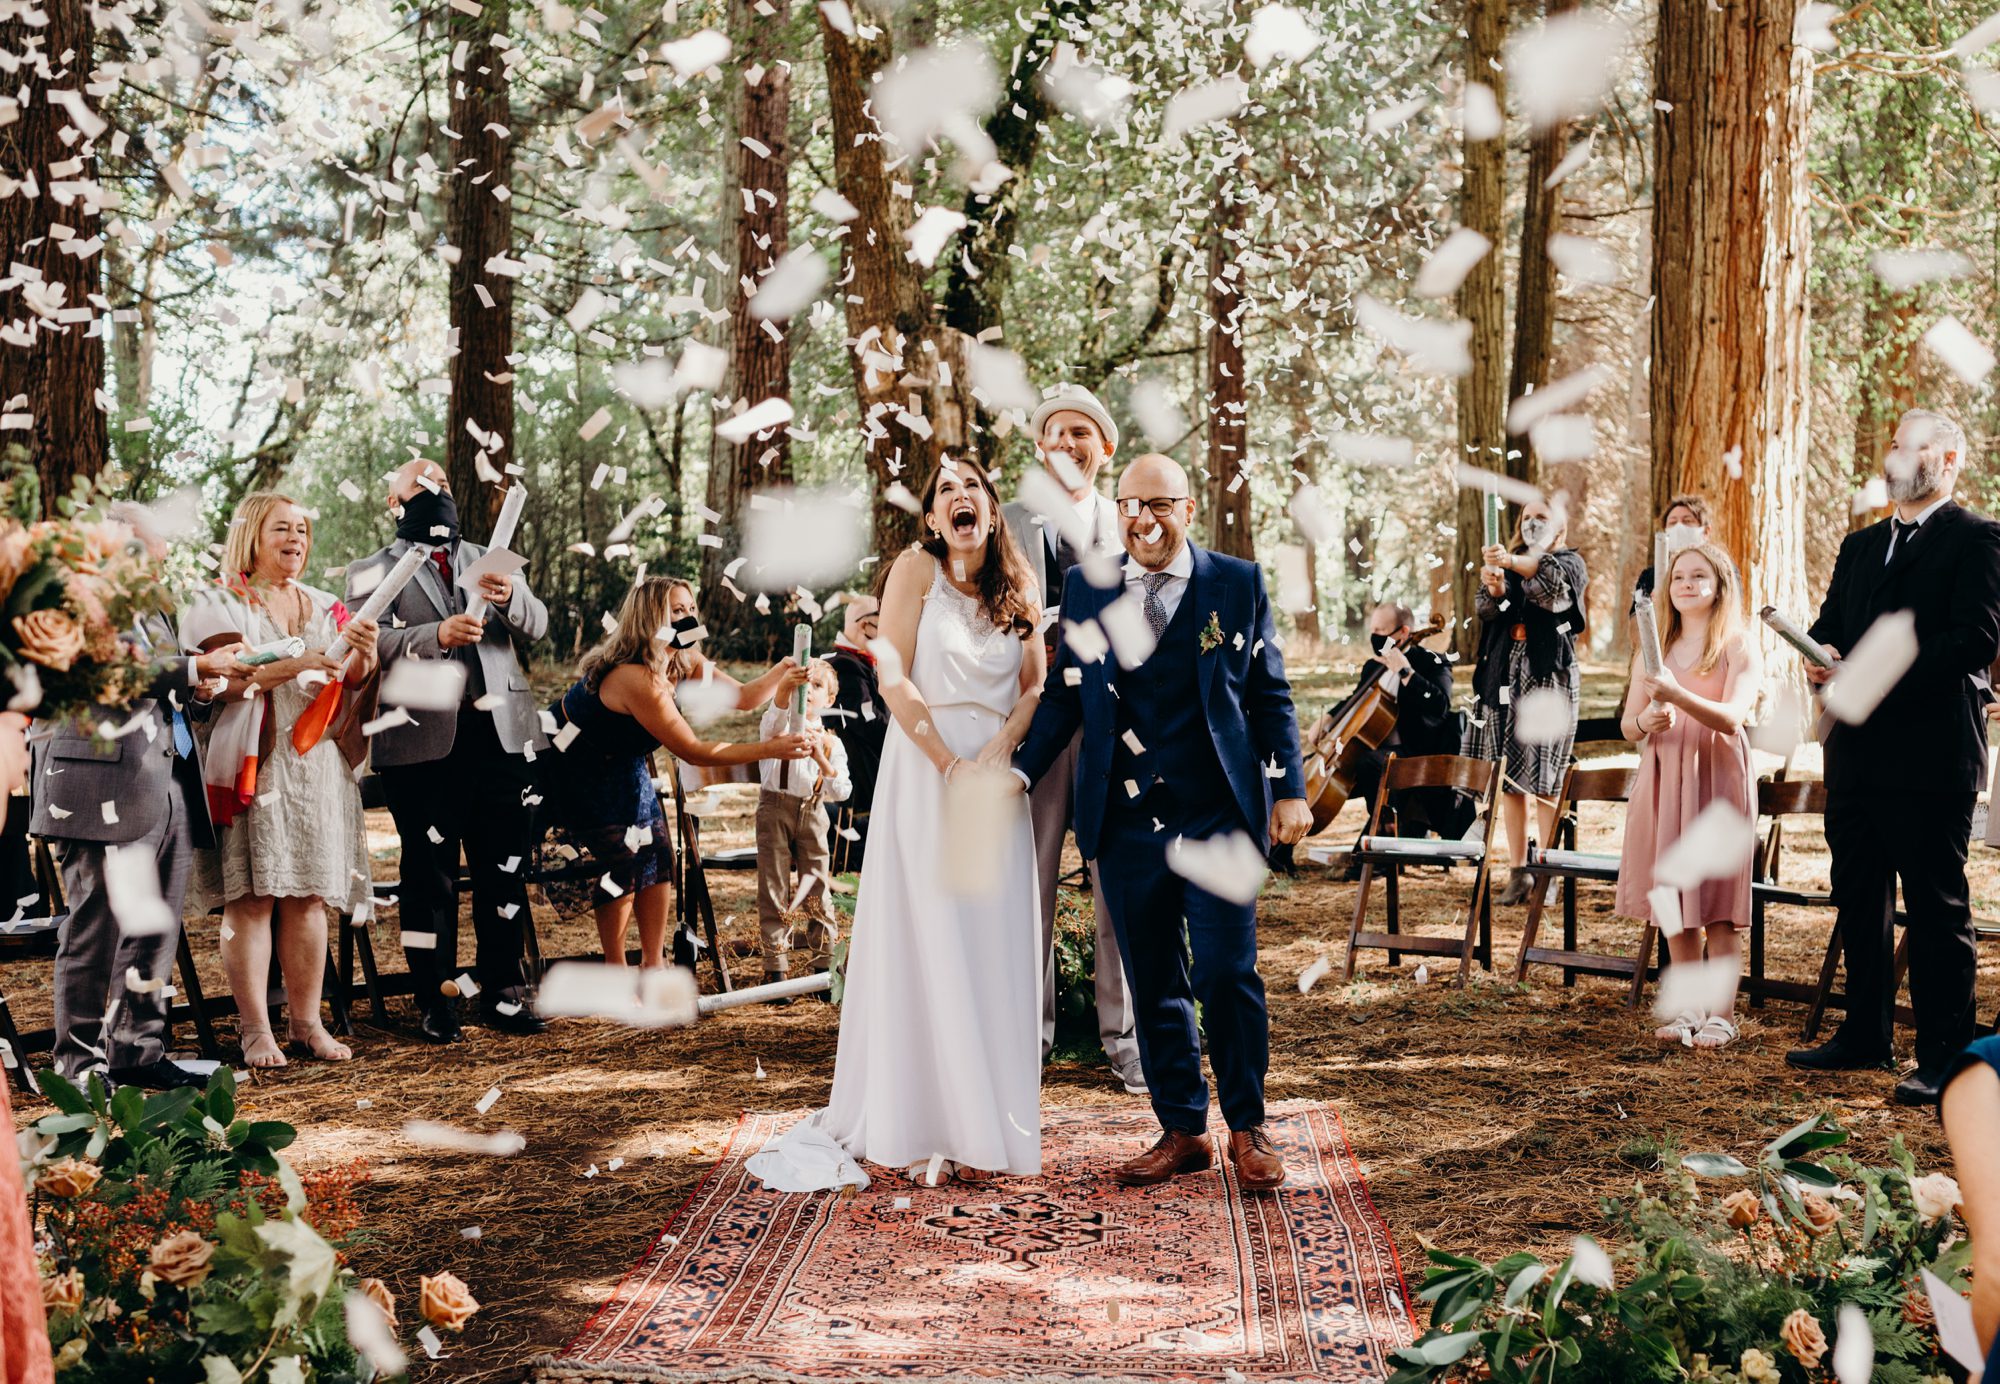 Wedding ceremony tips by Portland photographer, Briana Morrison.